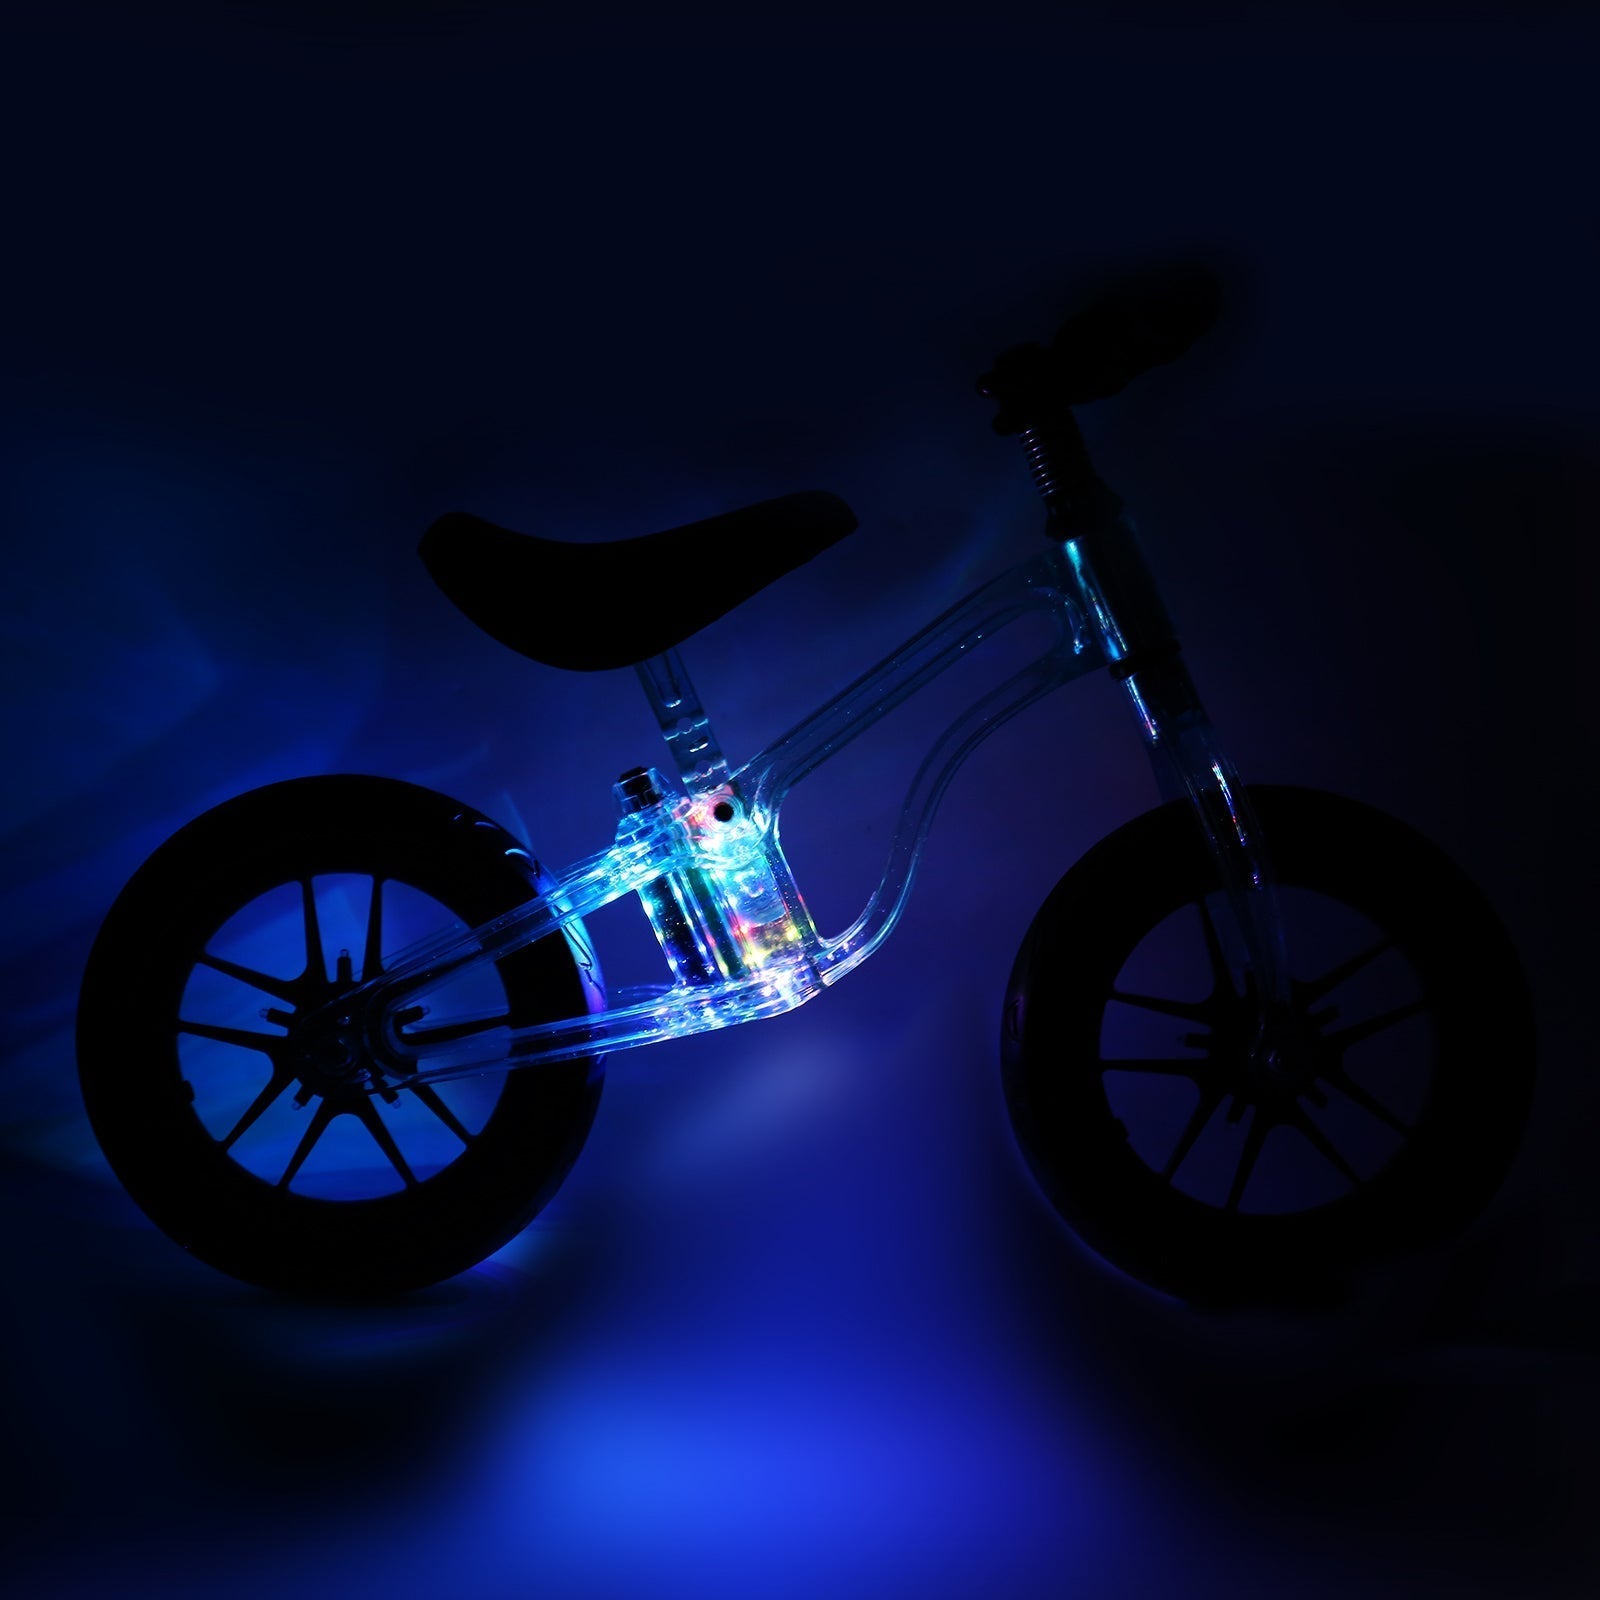 LED Balance Bike for Kids, No Pedal Toddler Push Bicycle with LED Flashing Lights,Children Balance Bike Adjustable